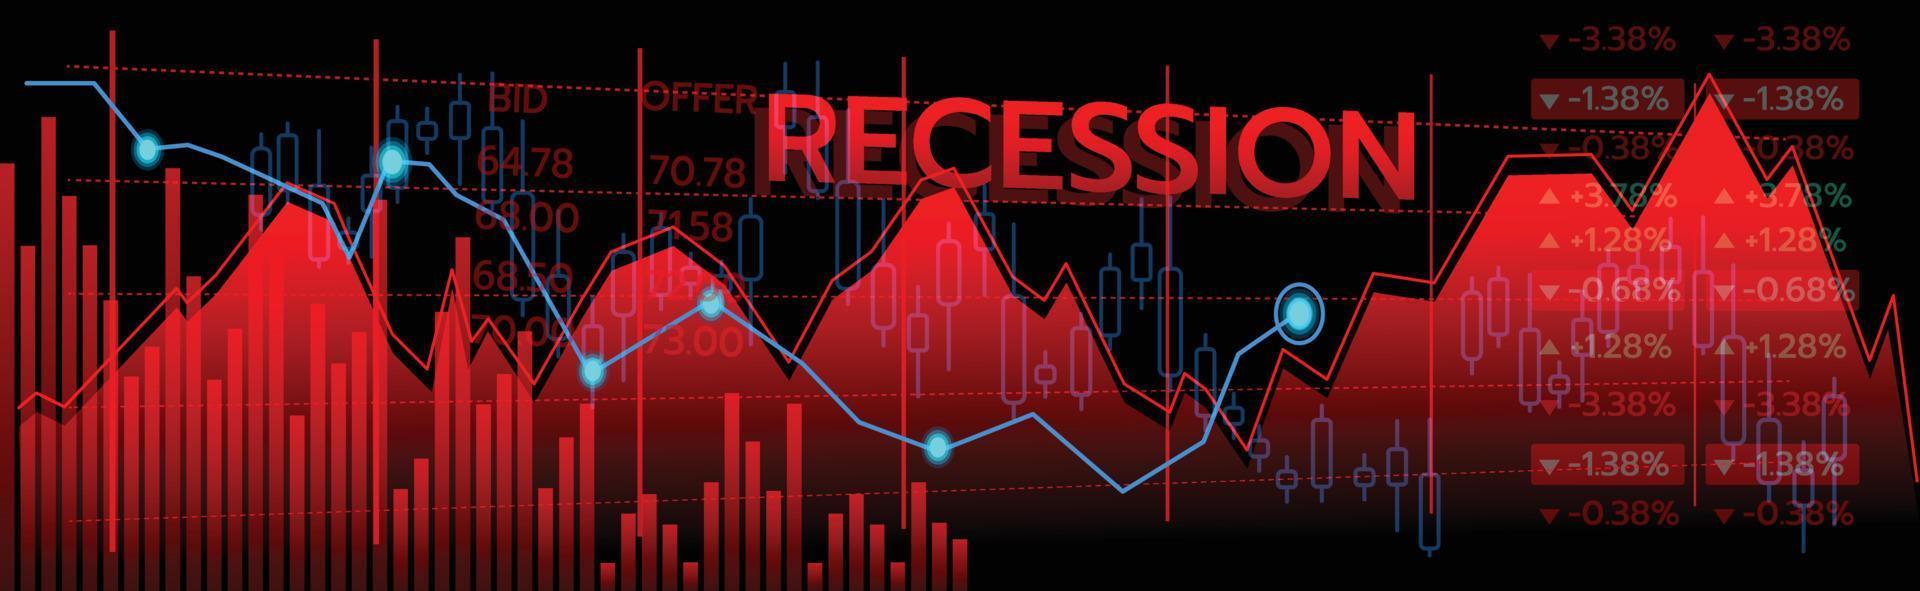 Rezession rotes Liniendiagramm vektor